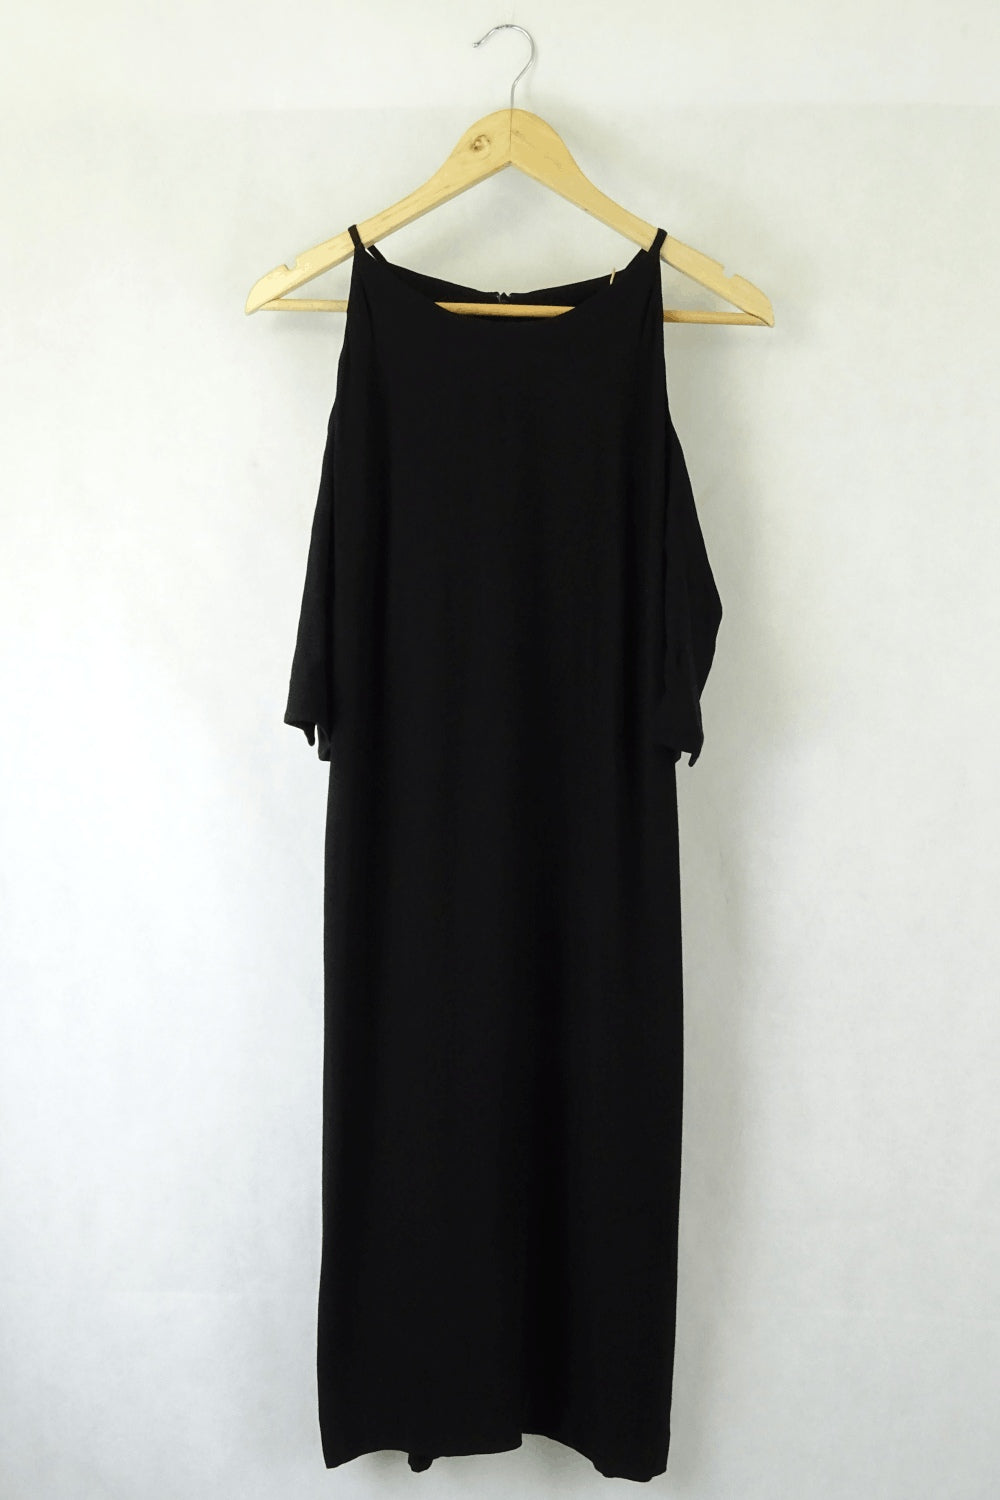 Veronika Maine Black Dress 12